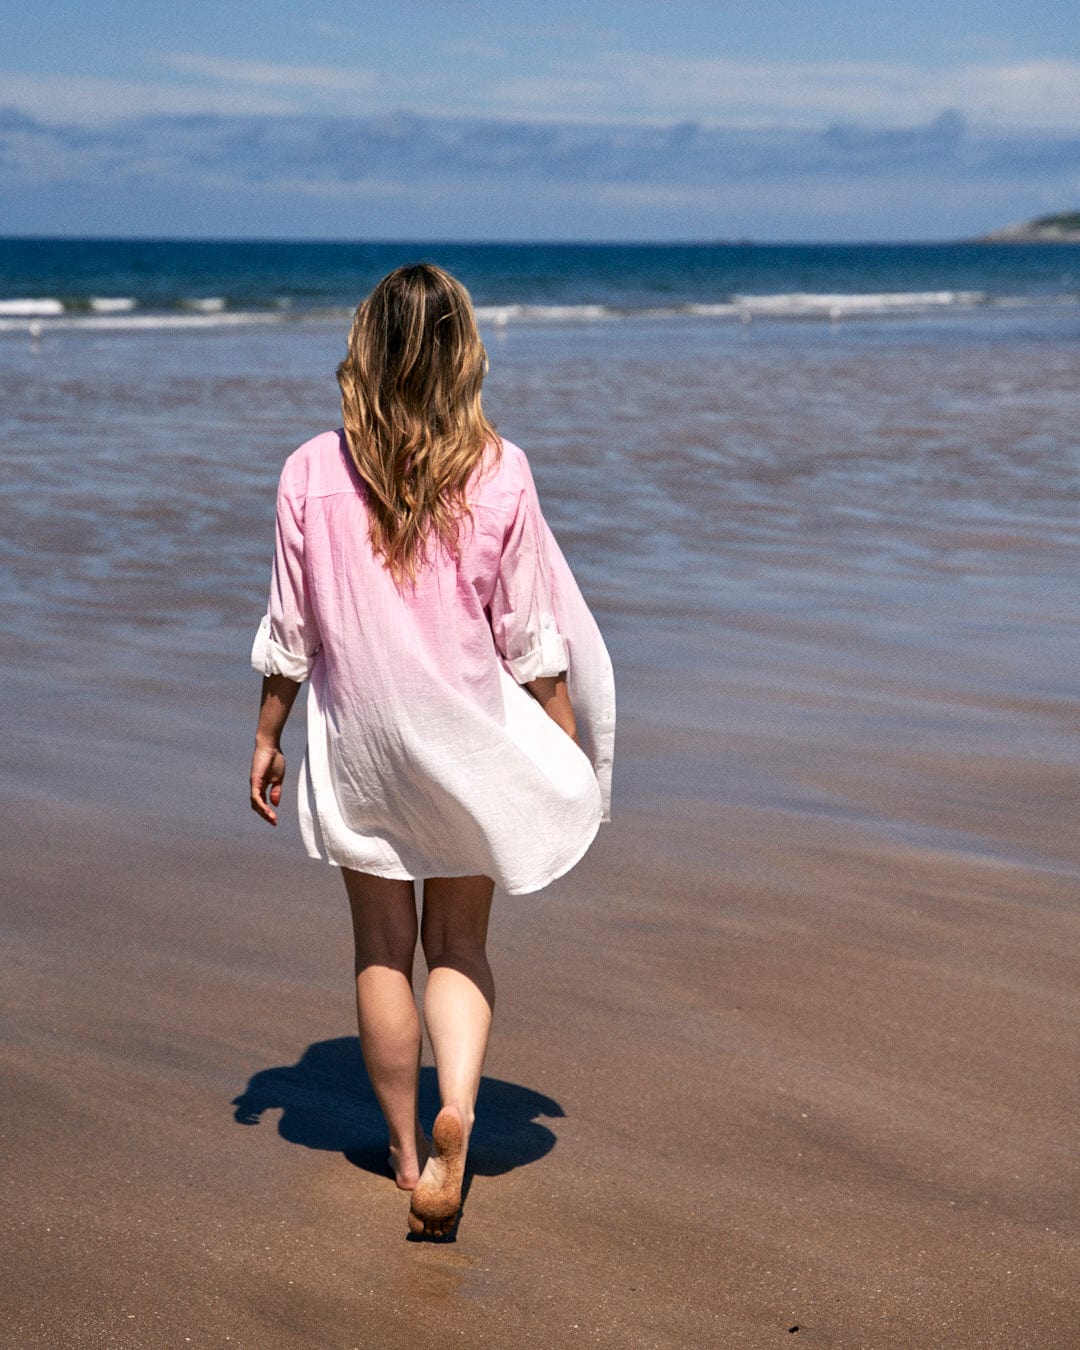 A person with long hair wearing a Saltrock Karthi - Womens Long Sleeve Shirt - Pink/White made of lightweight cotton material walks barefoot along a sandy beach towards the ocean.